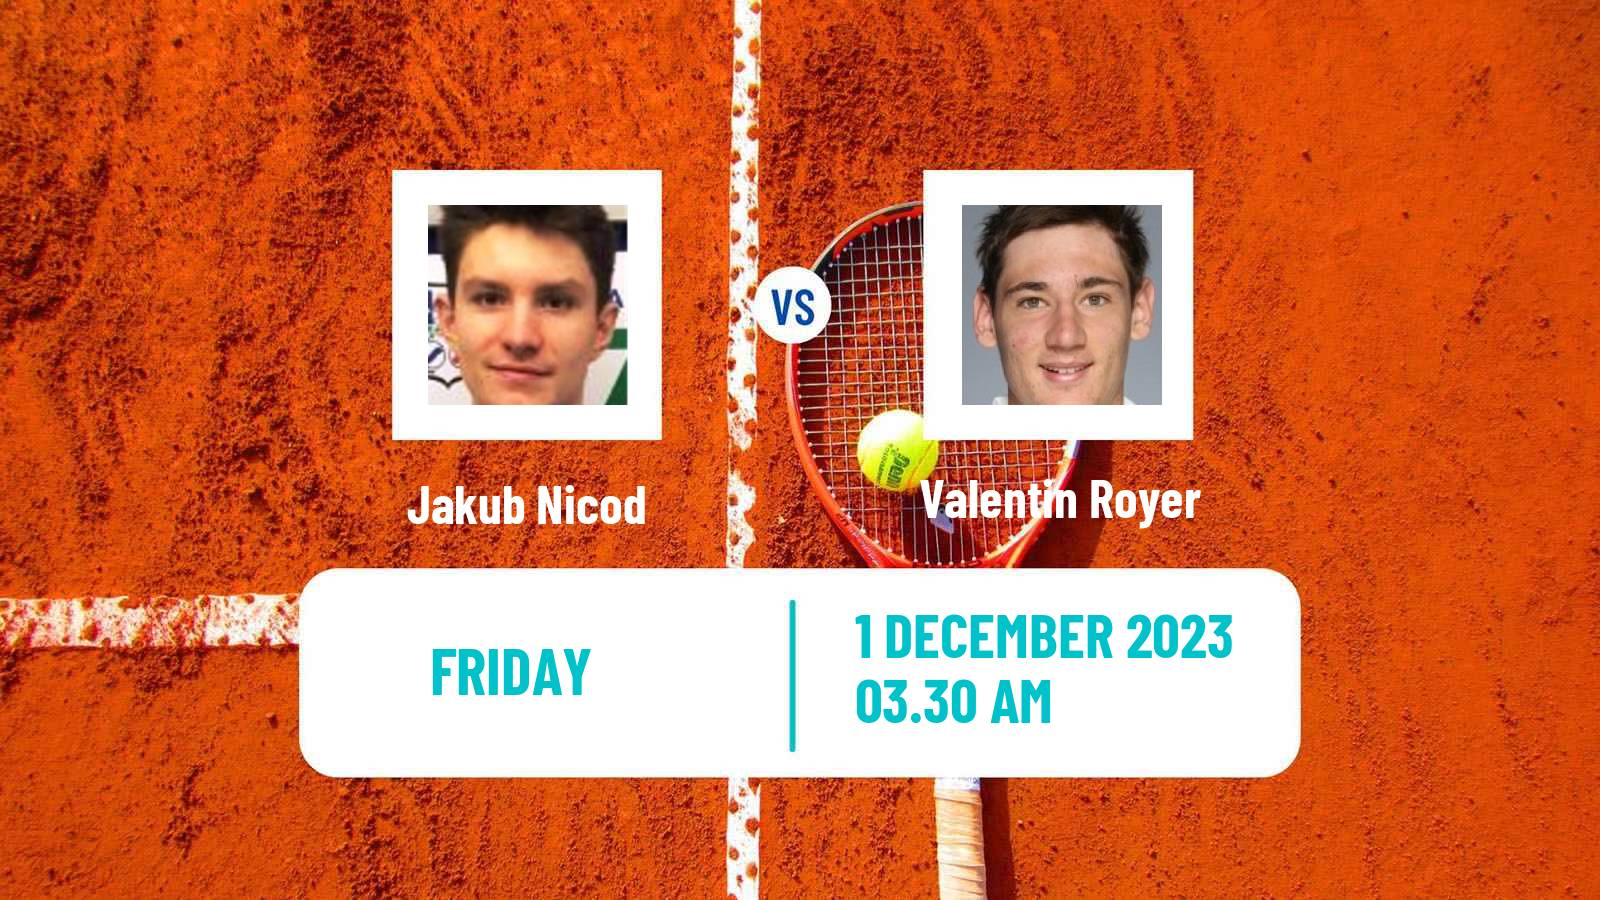 Tennis ITF M25 Heraklion 3 Men Jakub Nicod - Valentin Royer